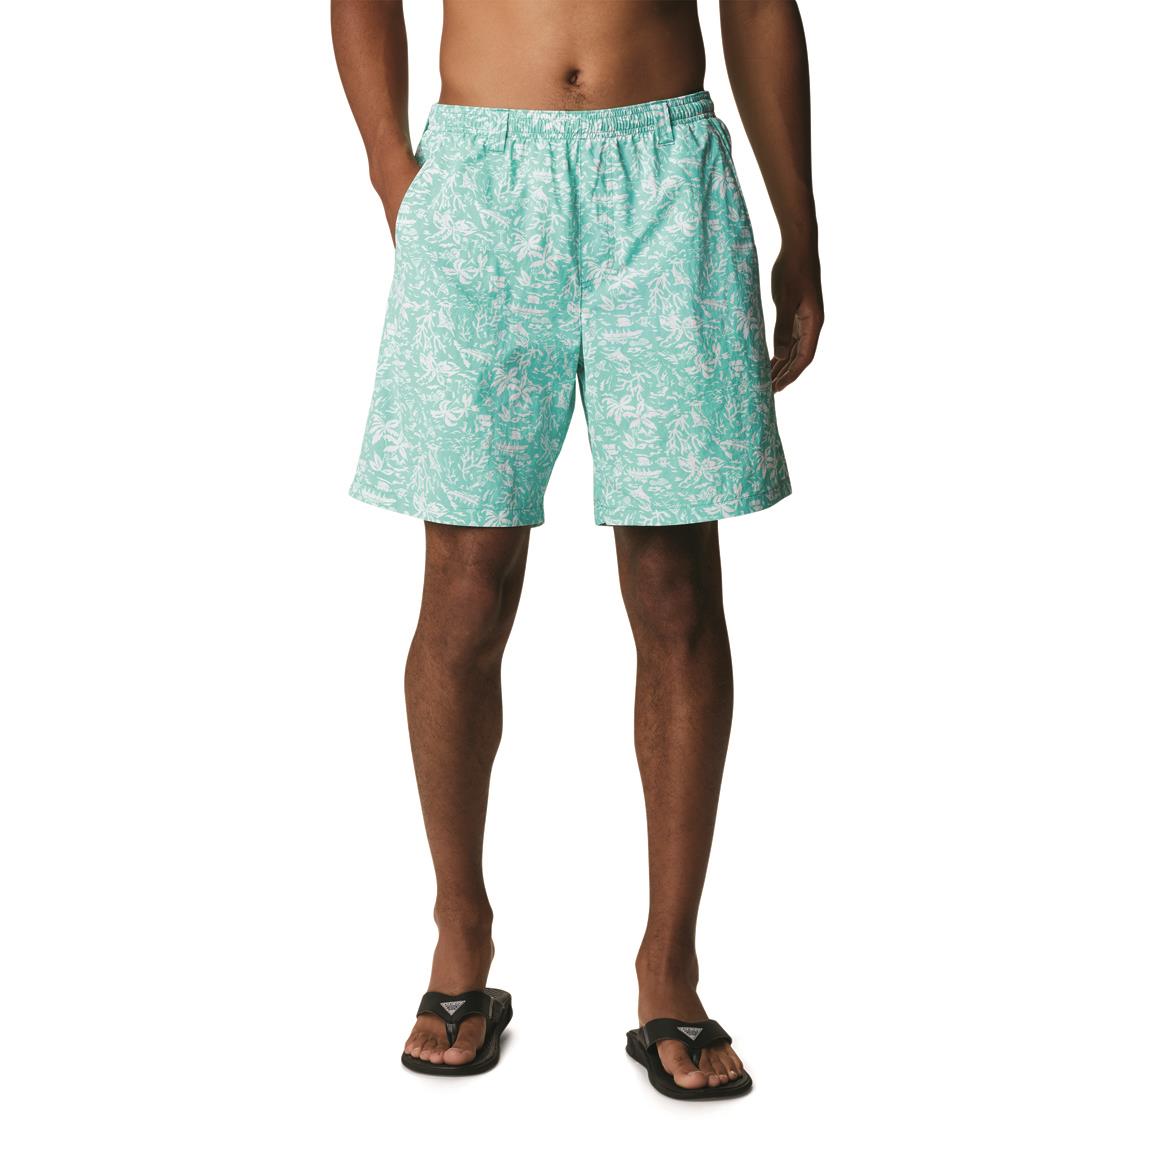 Columbia Men's Super Backcast Water Shorts, Electric Turquoise Kona Print